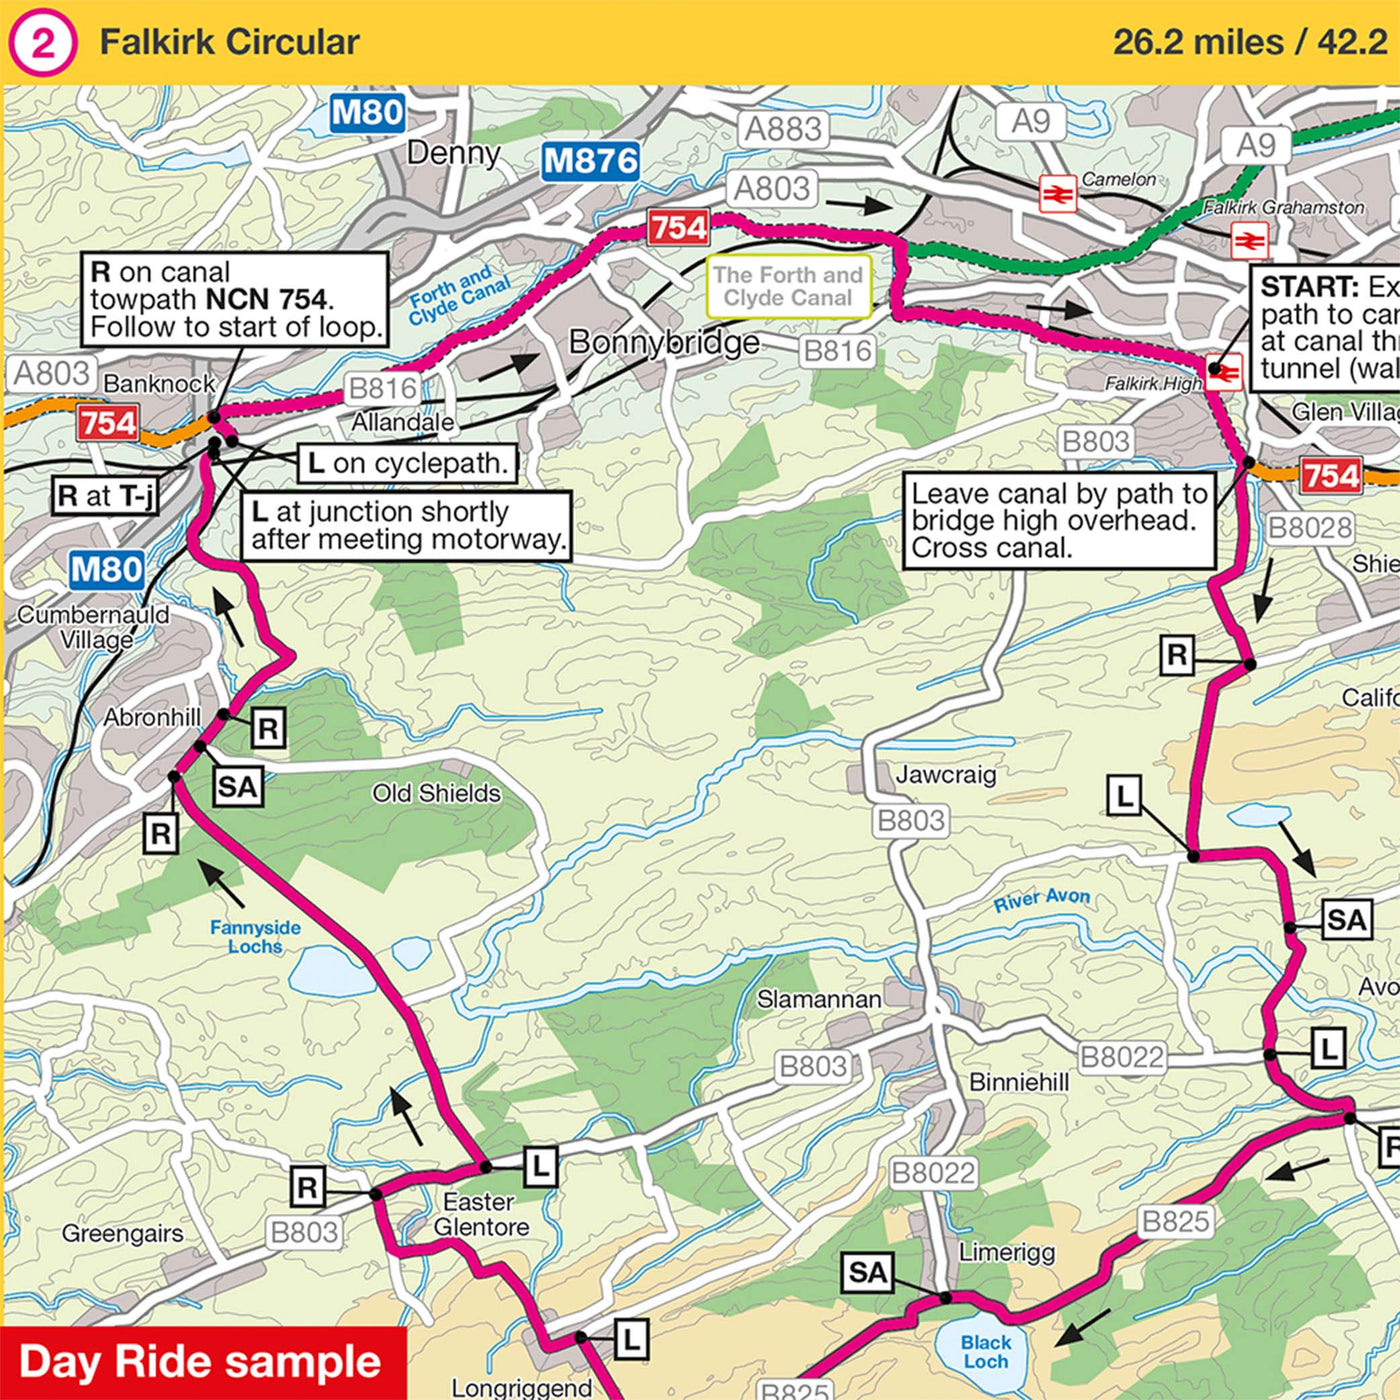 Day ride sample: Falkirk Circular, 26.2 miles